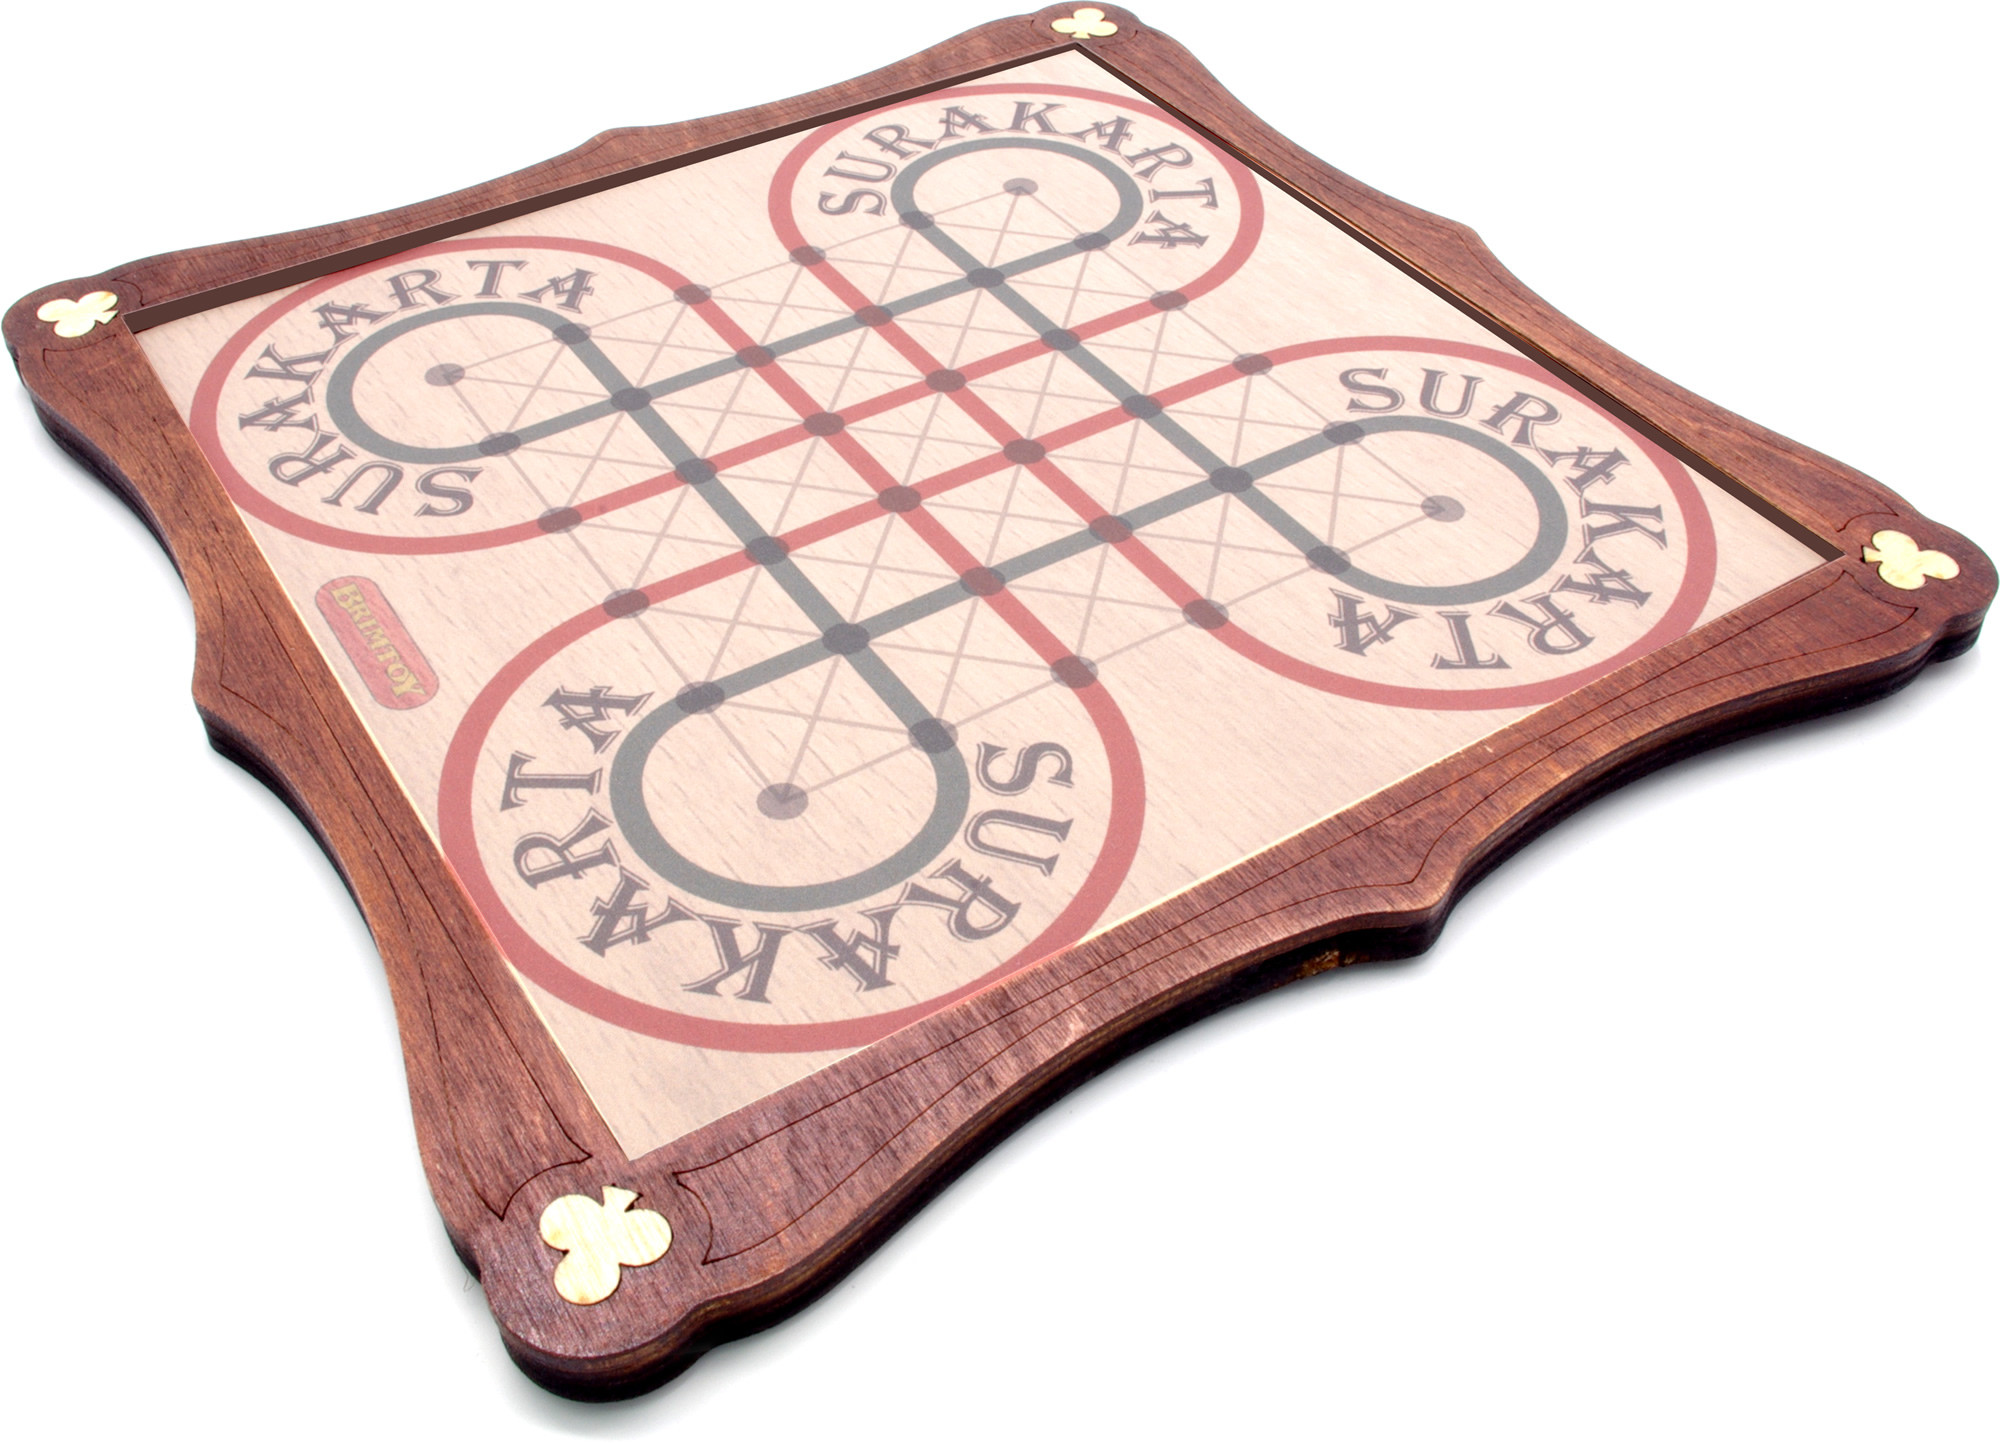 Surakarta / Permainan wooden board game 